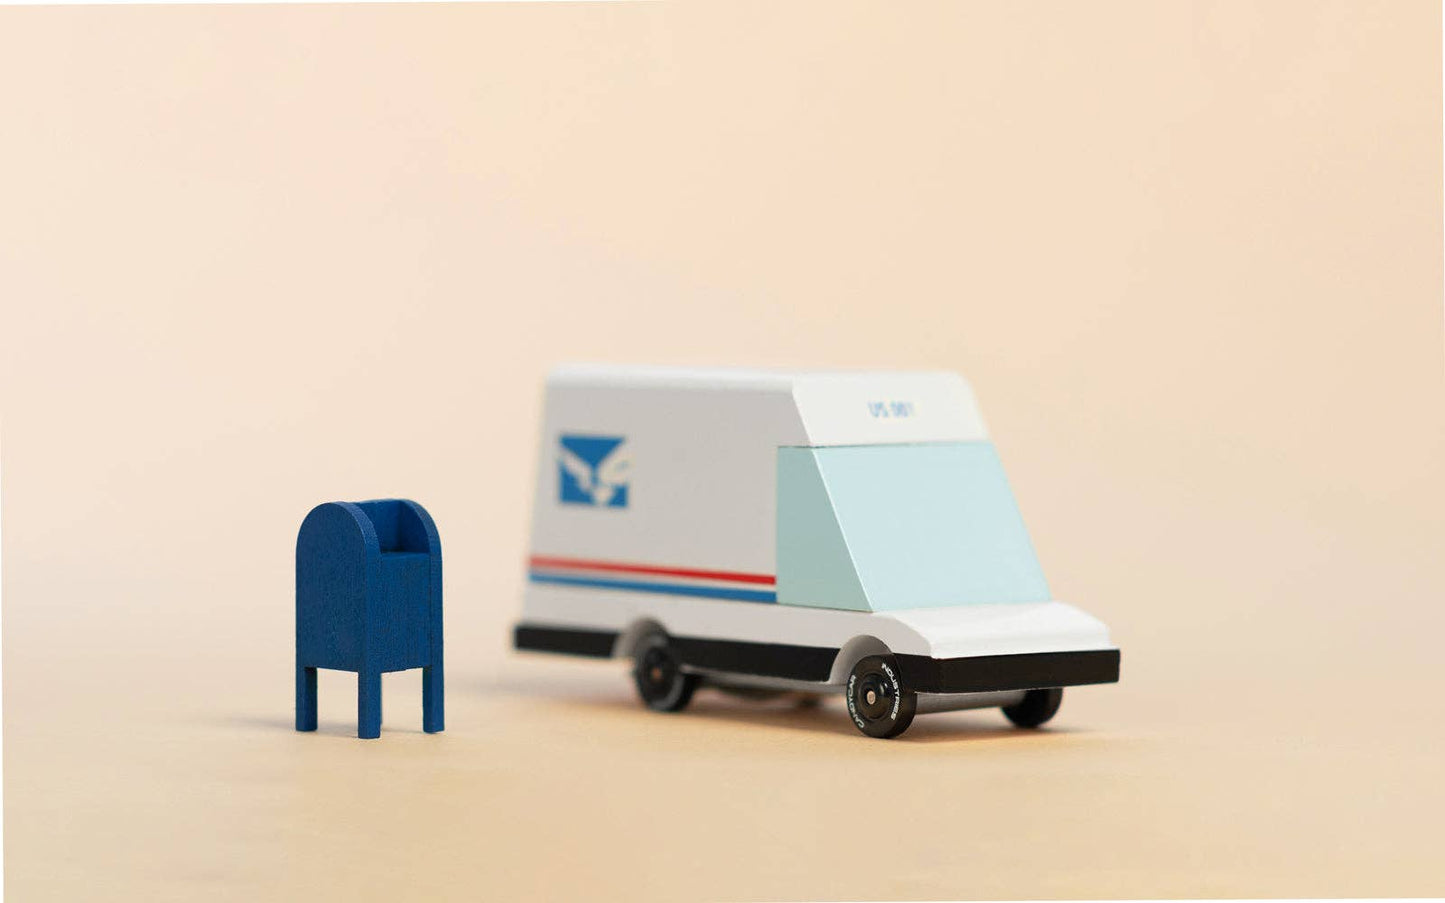 Futuristic Mail Van